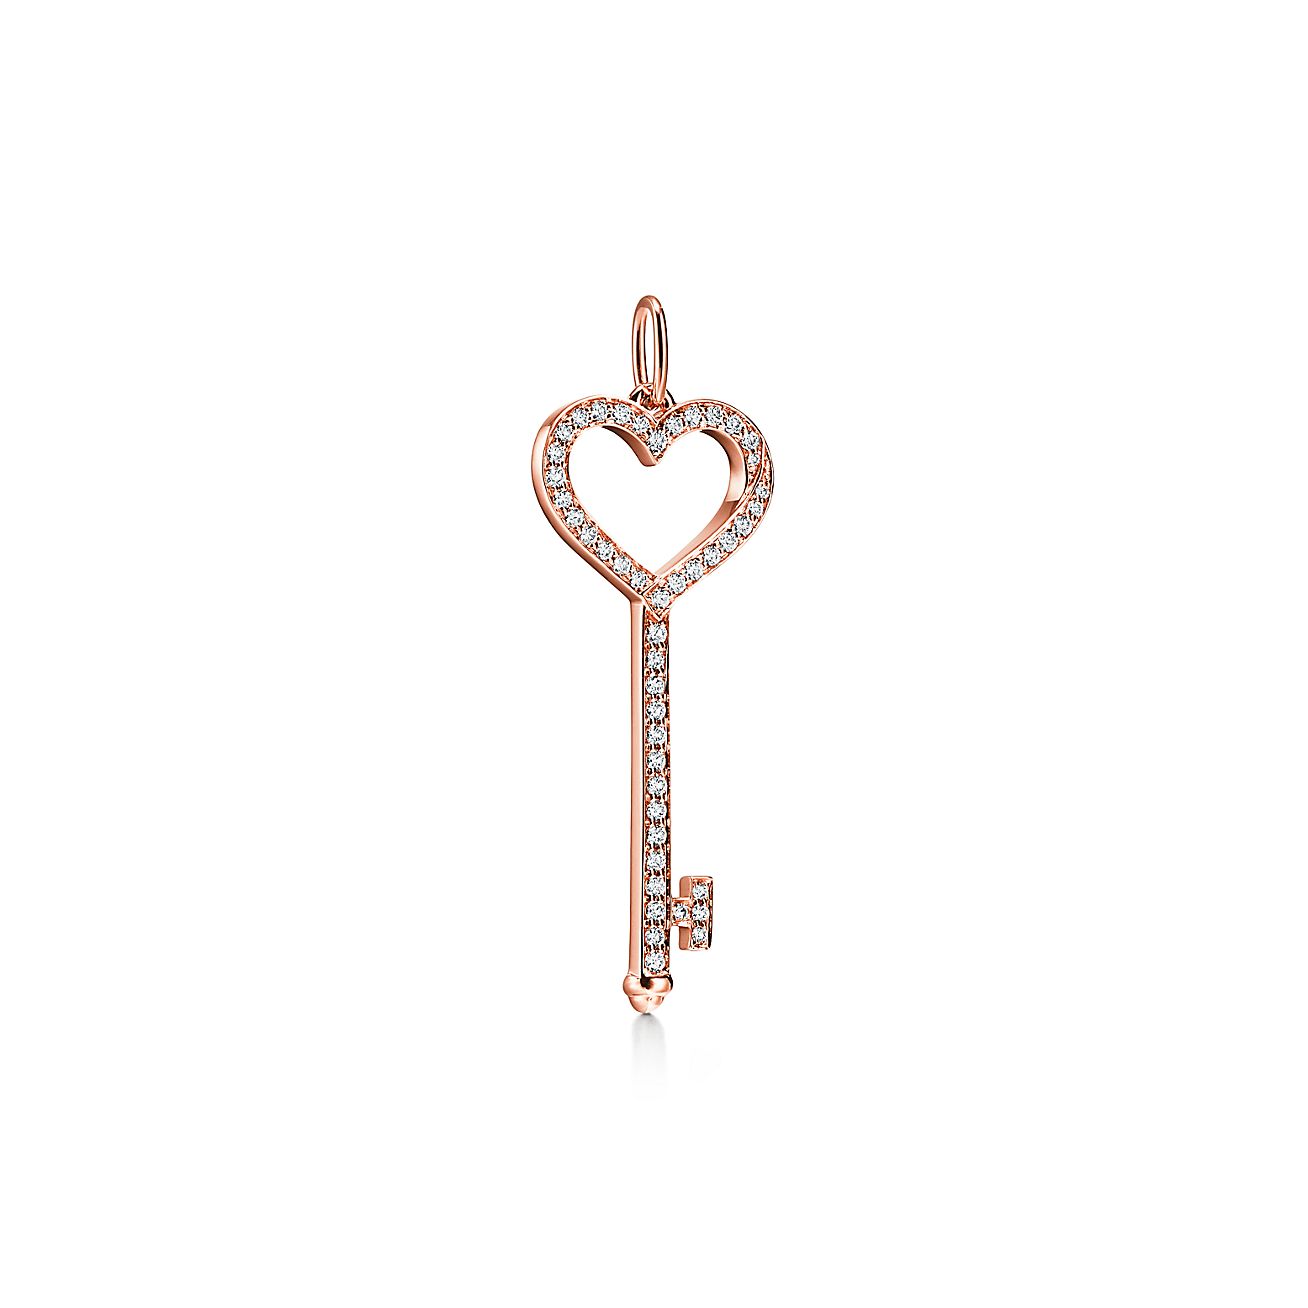 Jewelry as a symbol: introducing keys & locks